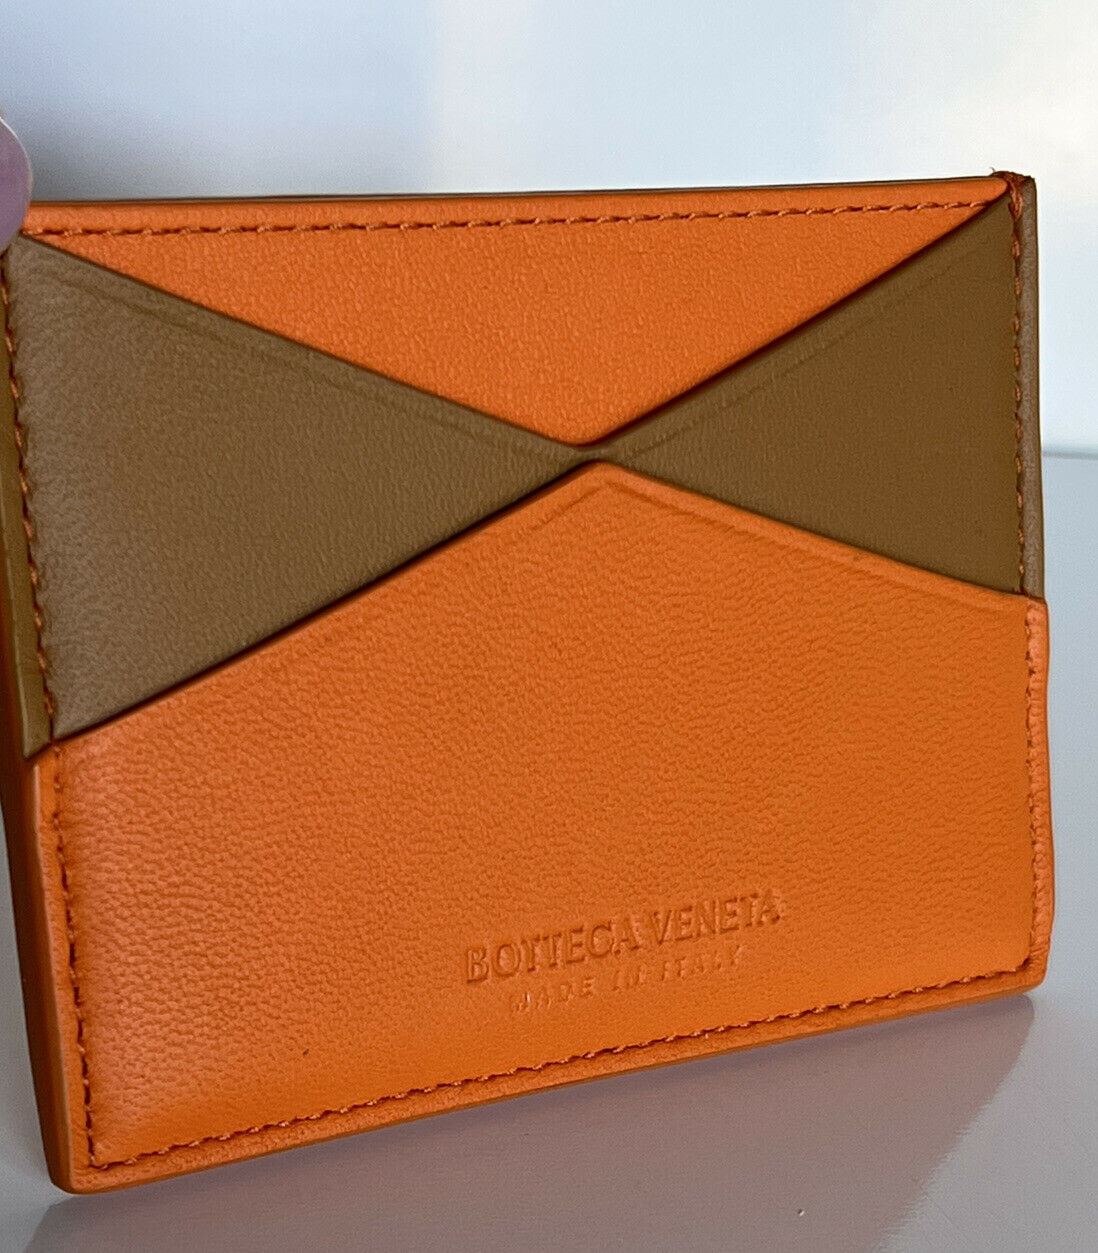 NWT $270 Bottega Veneta Women's Leather Card Case Light Orange, Caramel 597976